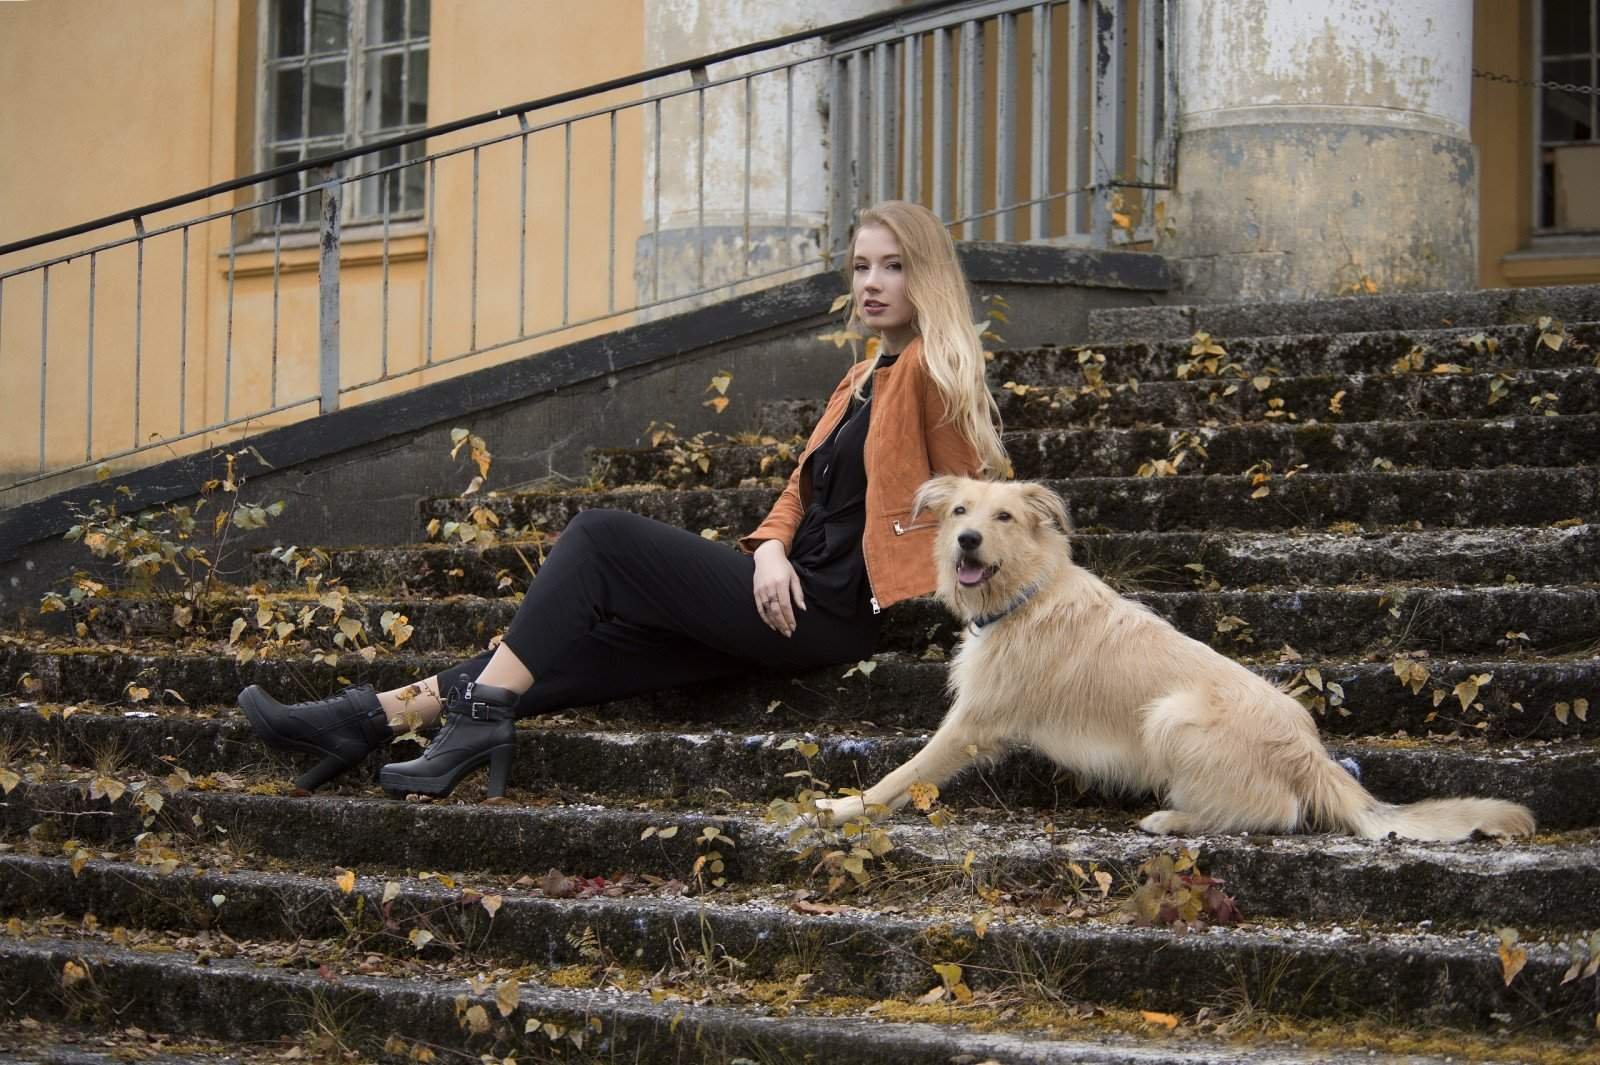 Картинка девушки с собакой. Девушка с собакой. Девушка с собакой фотосессия. Девушка в городе с собачкой. Девушка с собакой в городе.